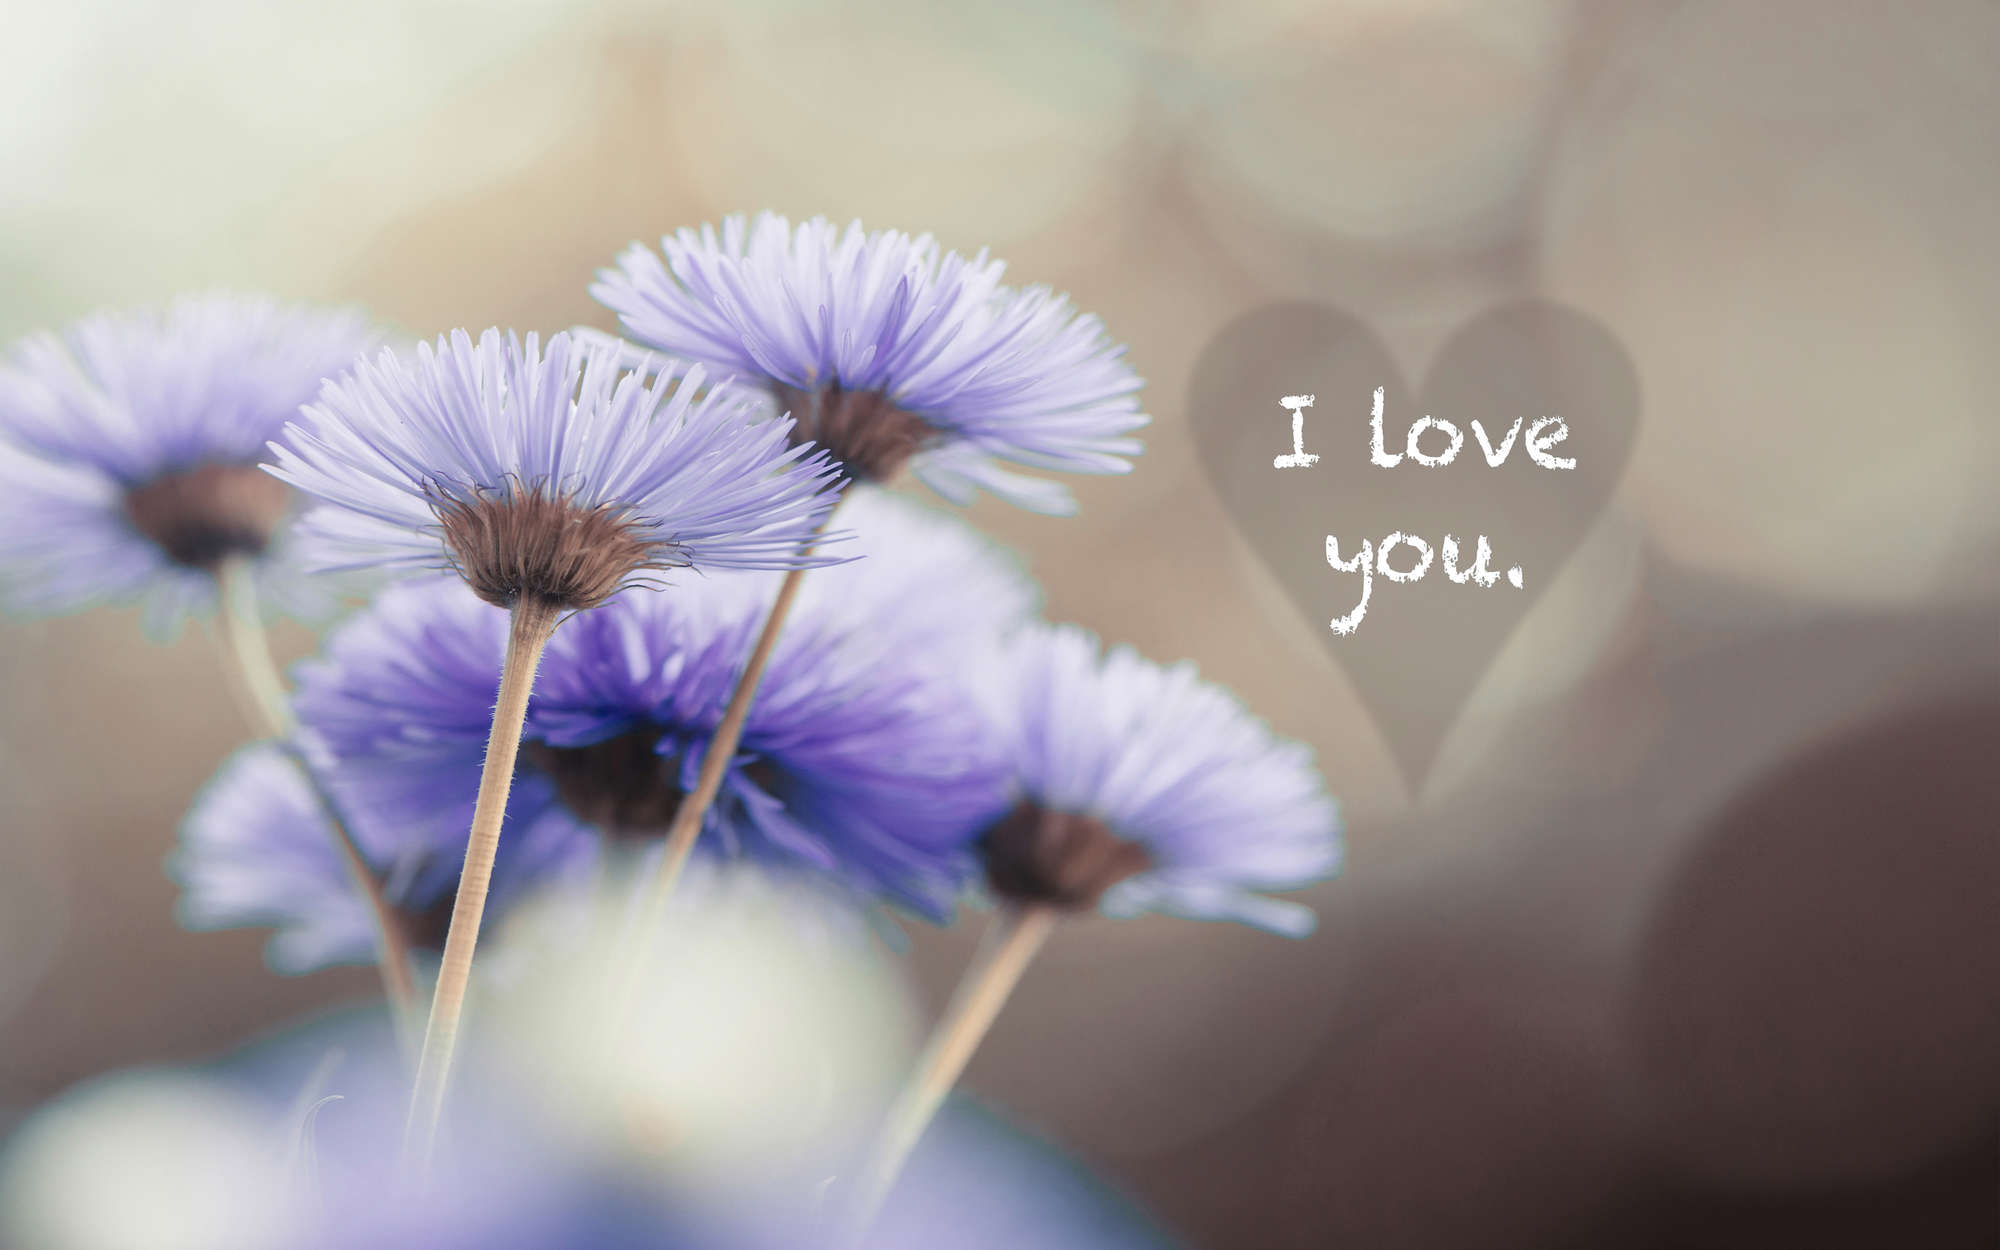             Fotomurali a fiori in viola con scritta "I love you" - Pile liscio premium
        